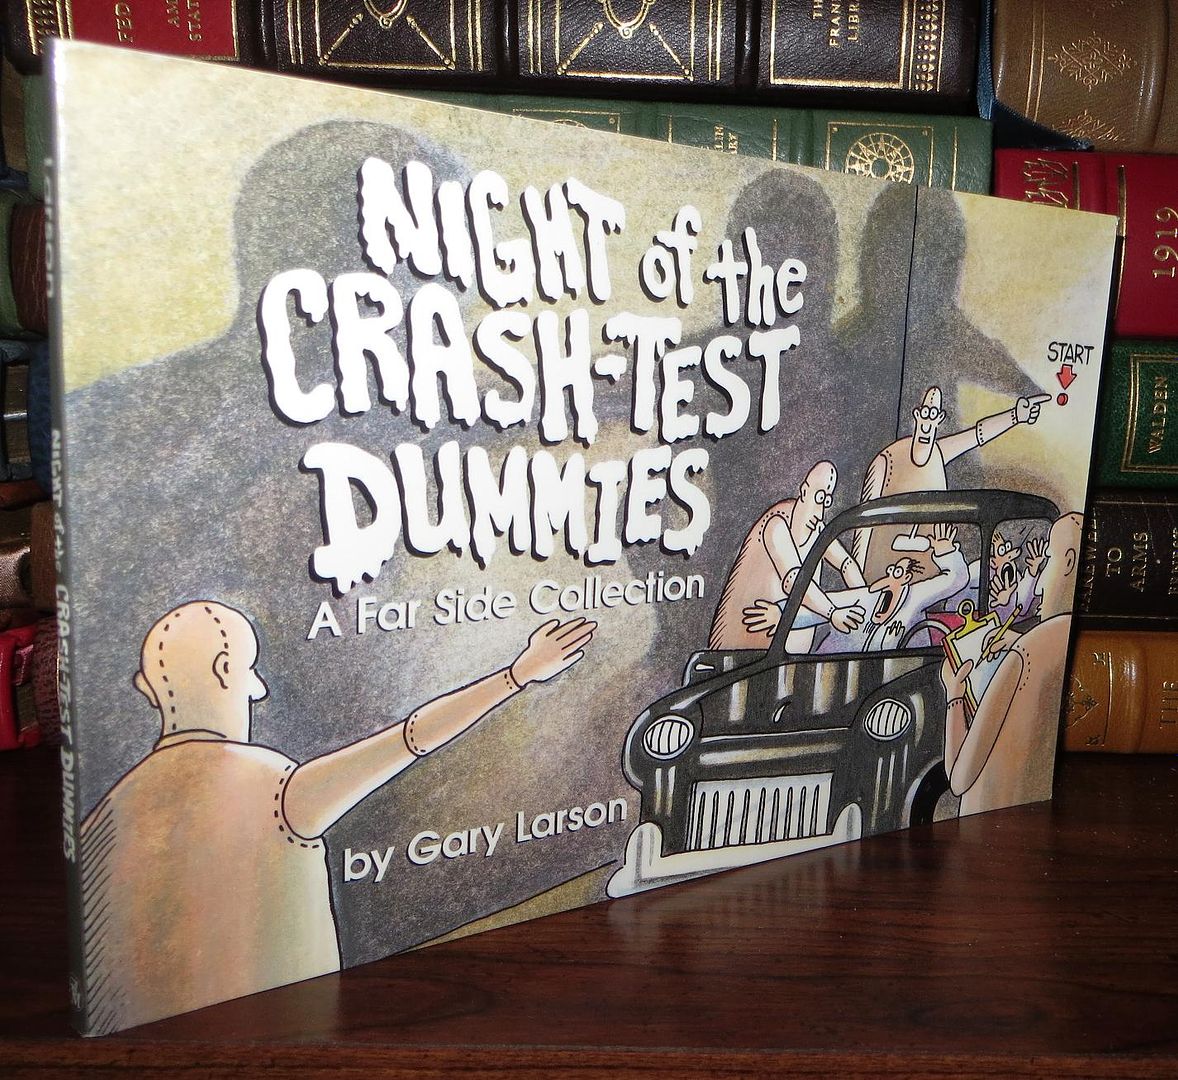 LARSON, GARY - Night of the Crash-Test Dummies